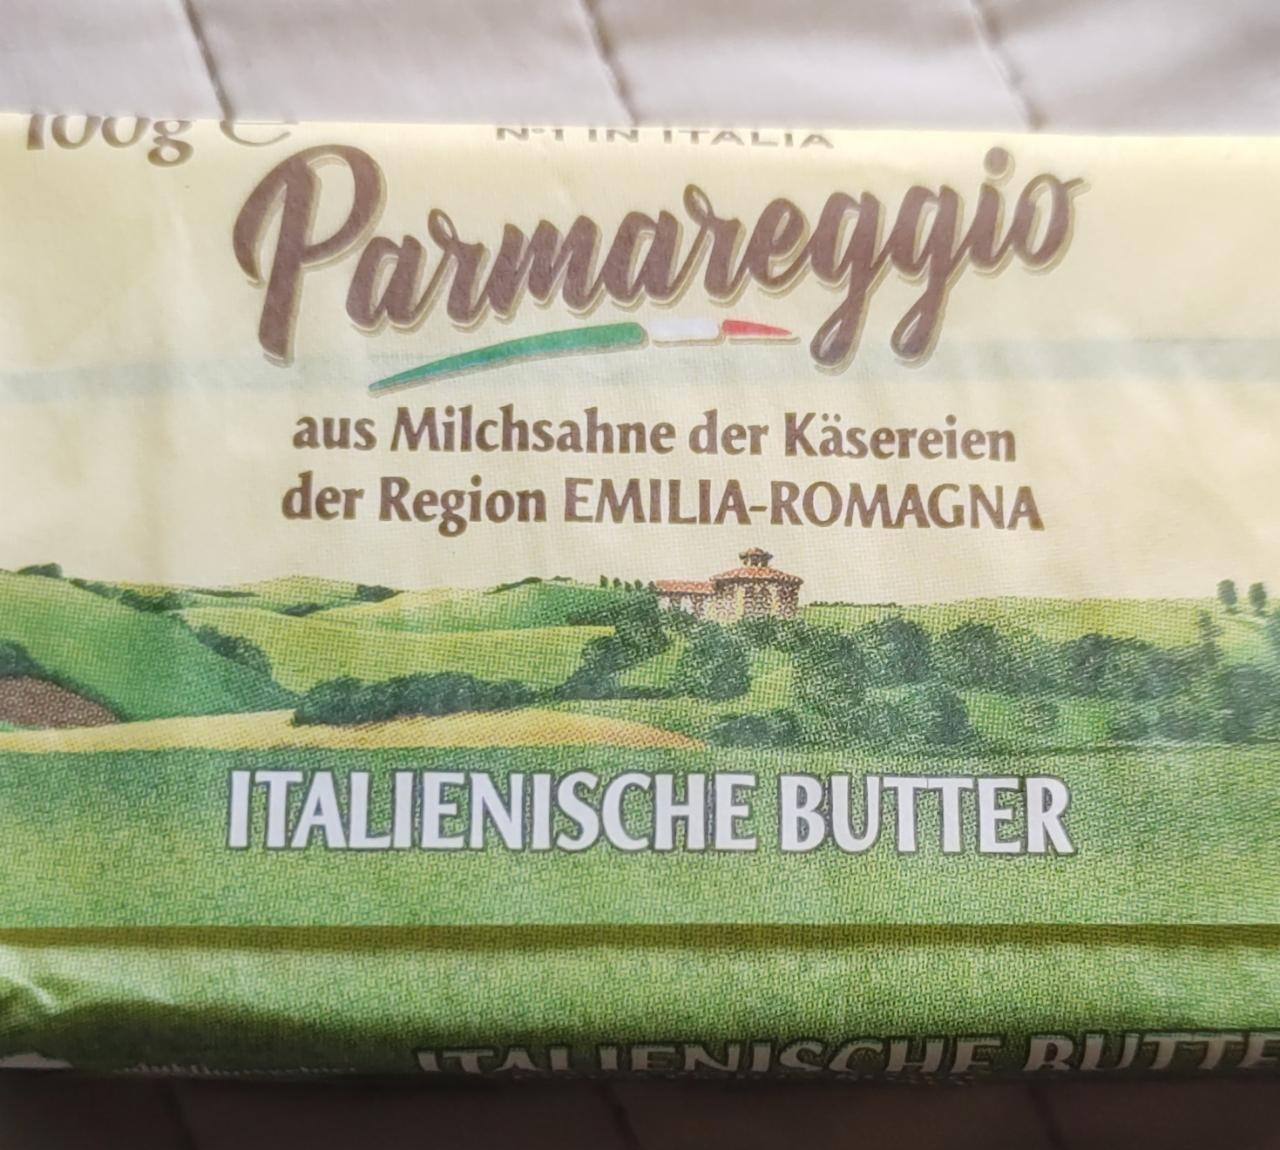 Fotografie - Italienische butter Parmareggio